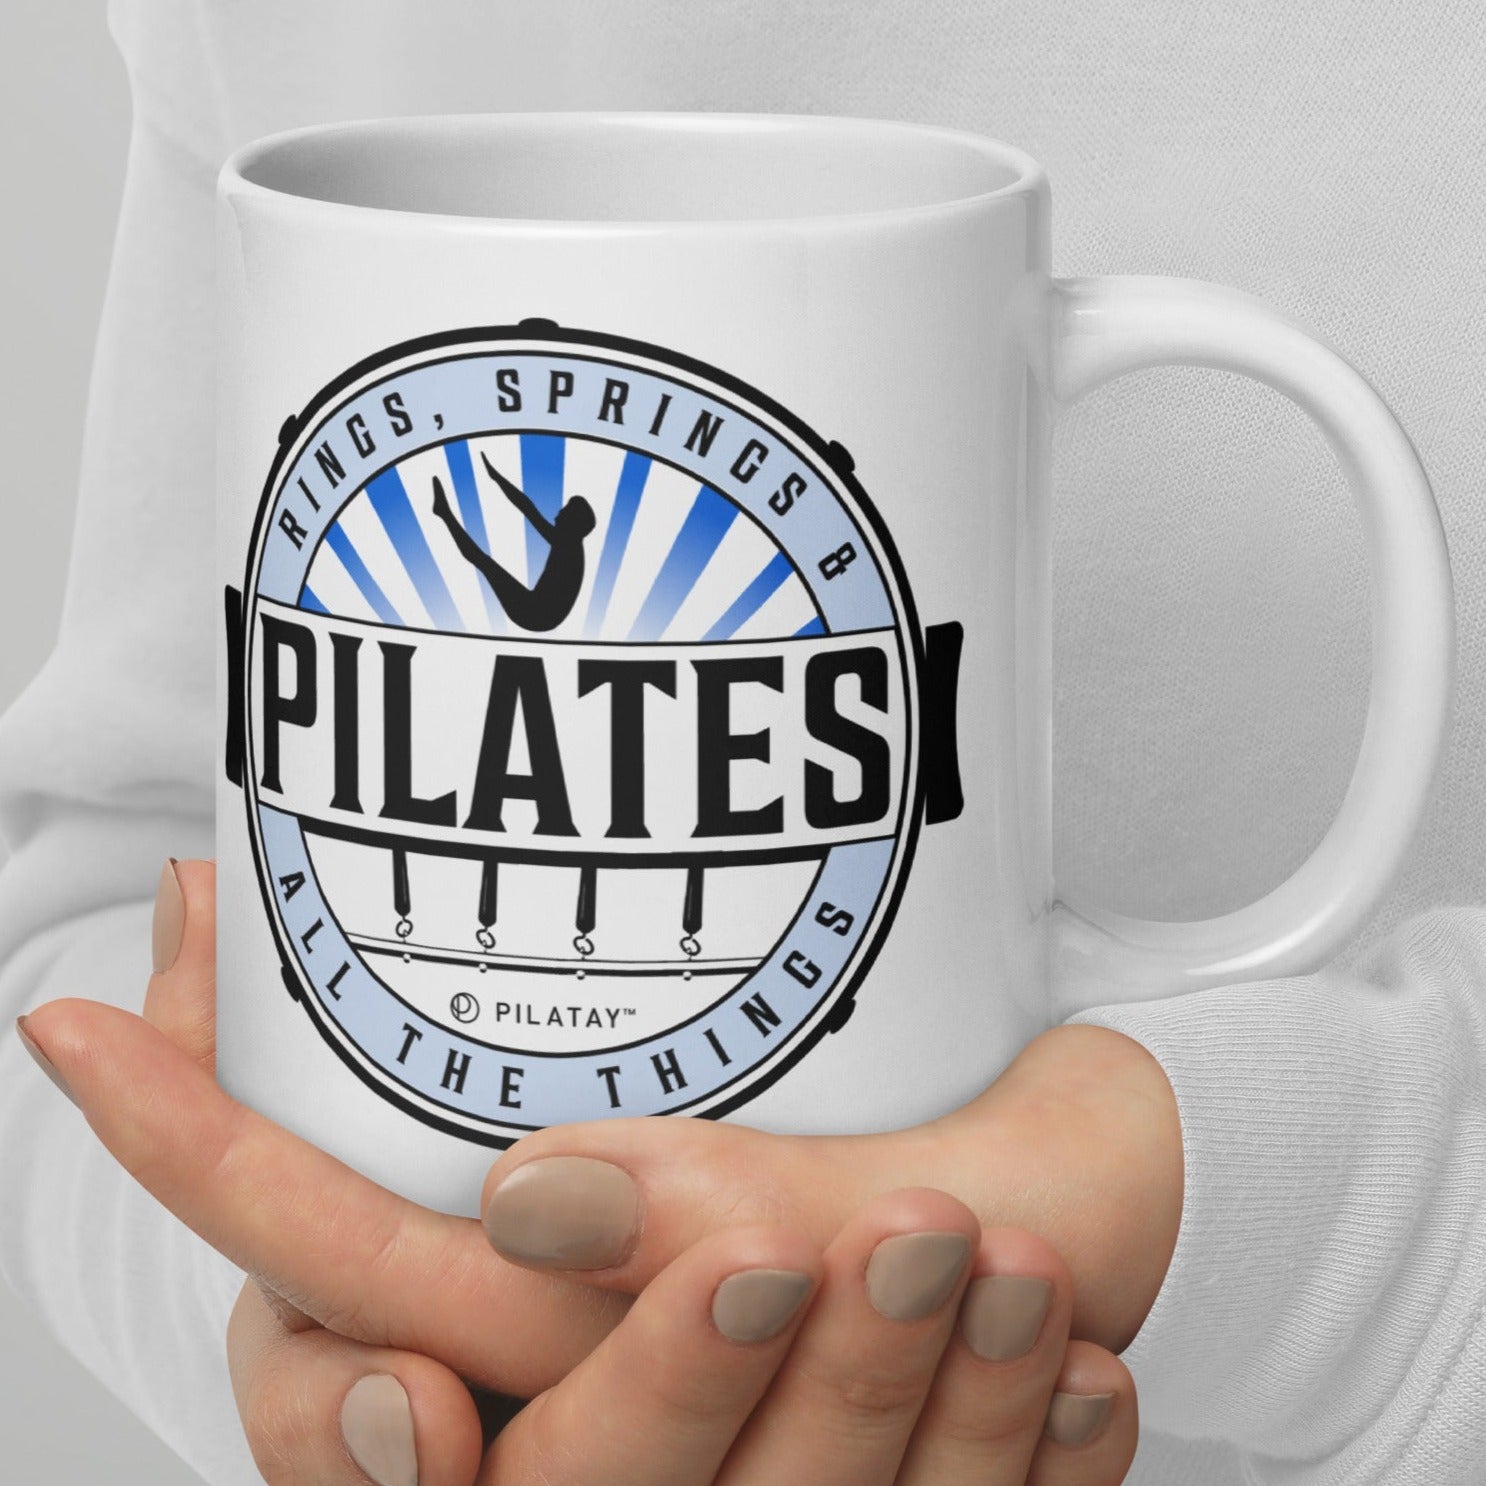 Pilates Coffee Mug 